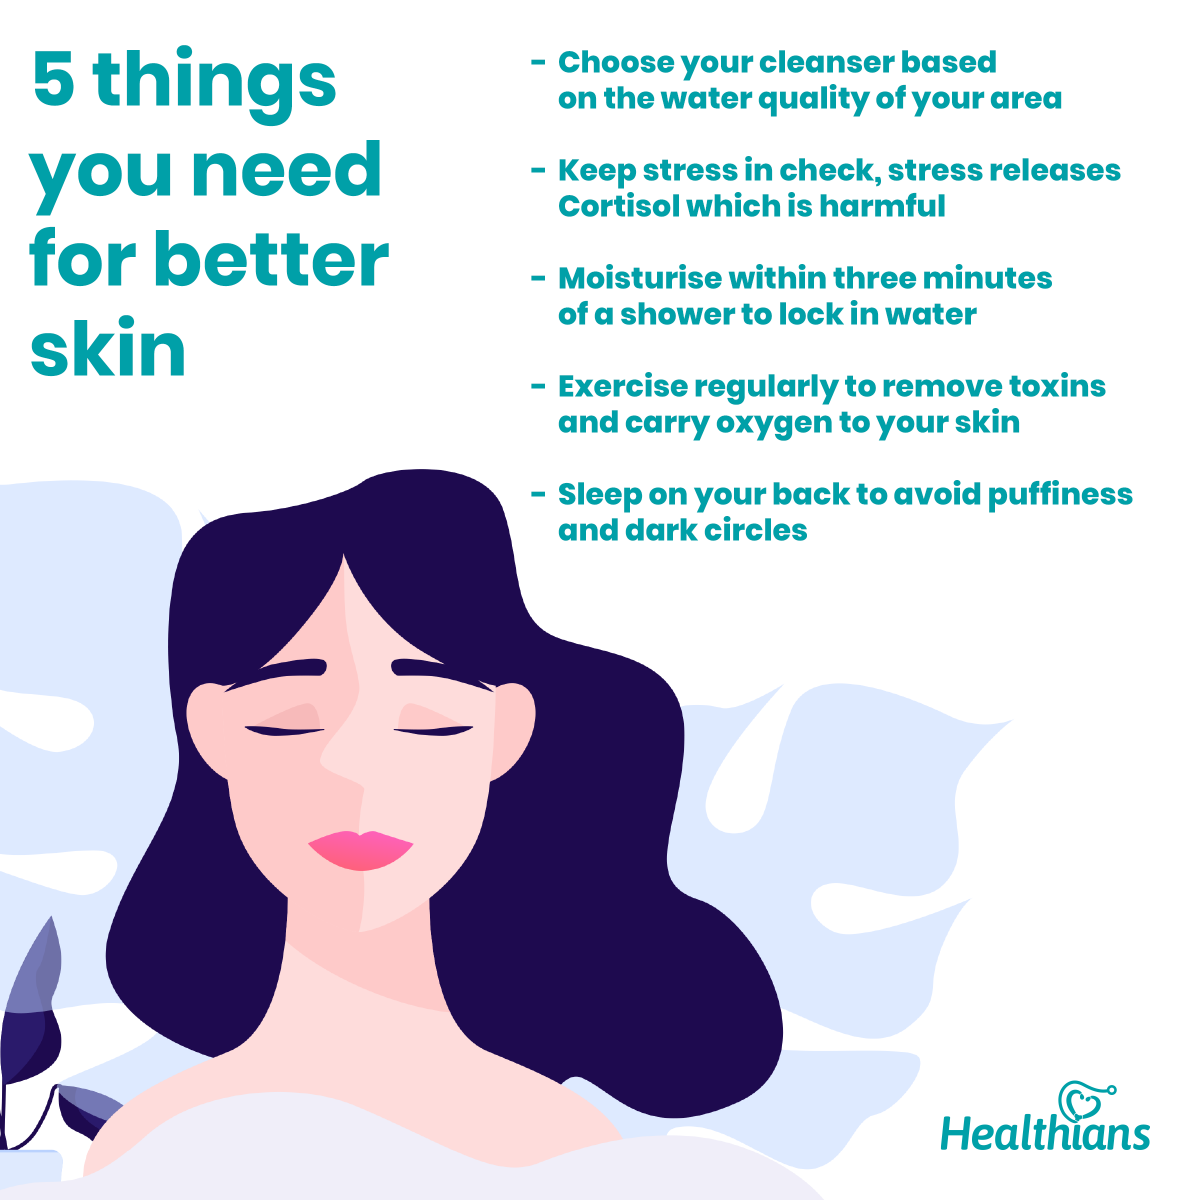 Take care of your skin with these 5 easy tips. 
#skincare #GreatSkin #SkincareTips #India #indianskincare #Healthtips